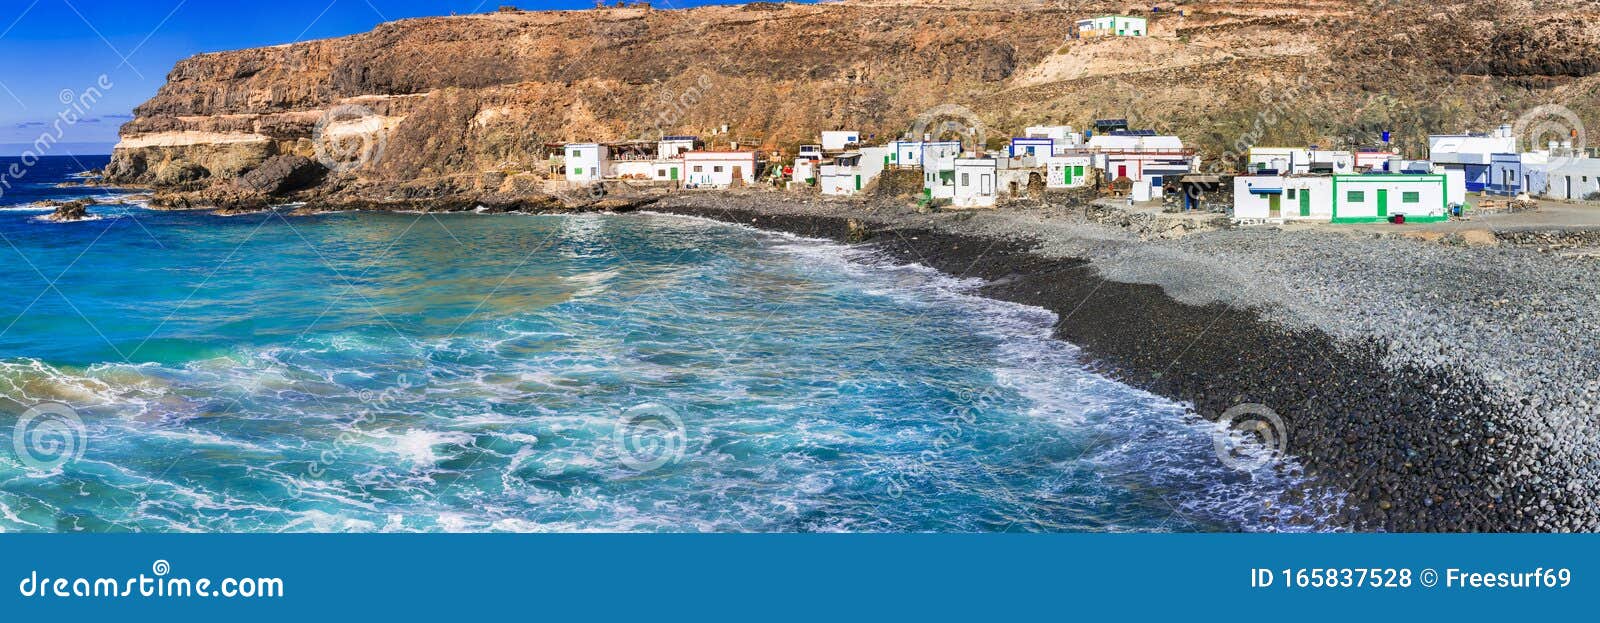 fuerteventura - unspoiled beach and traditional fishing village puertito de molinos. canary islands